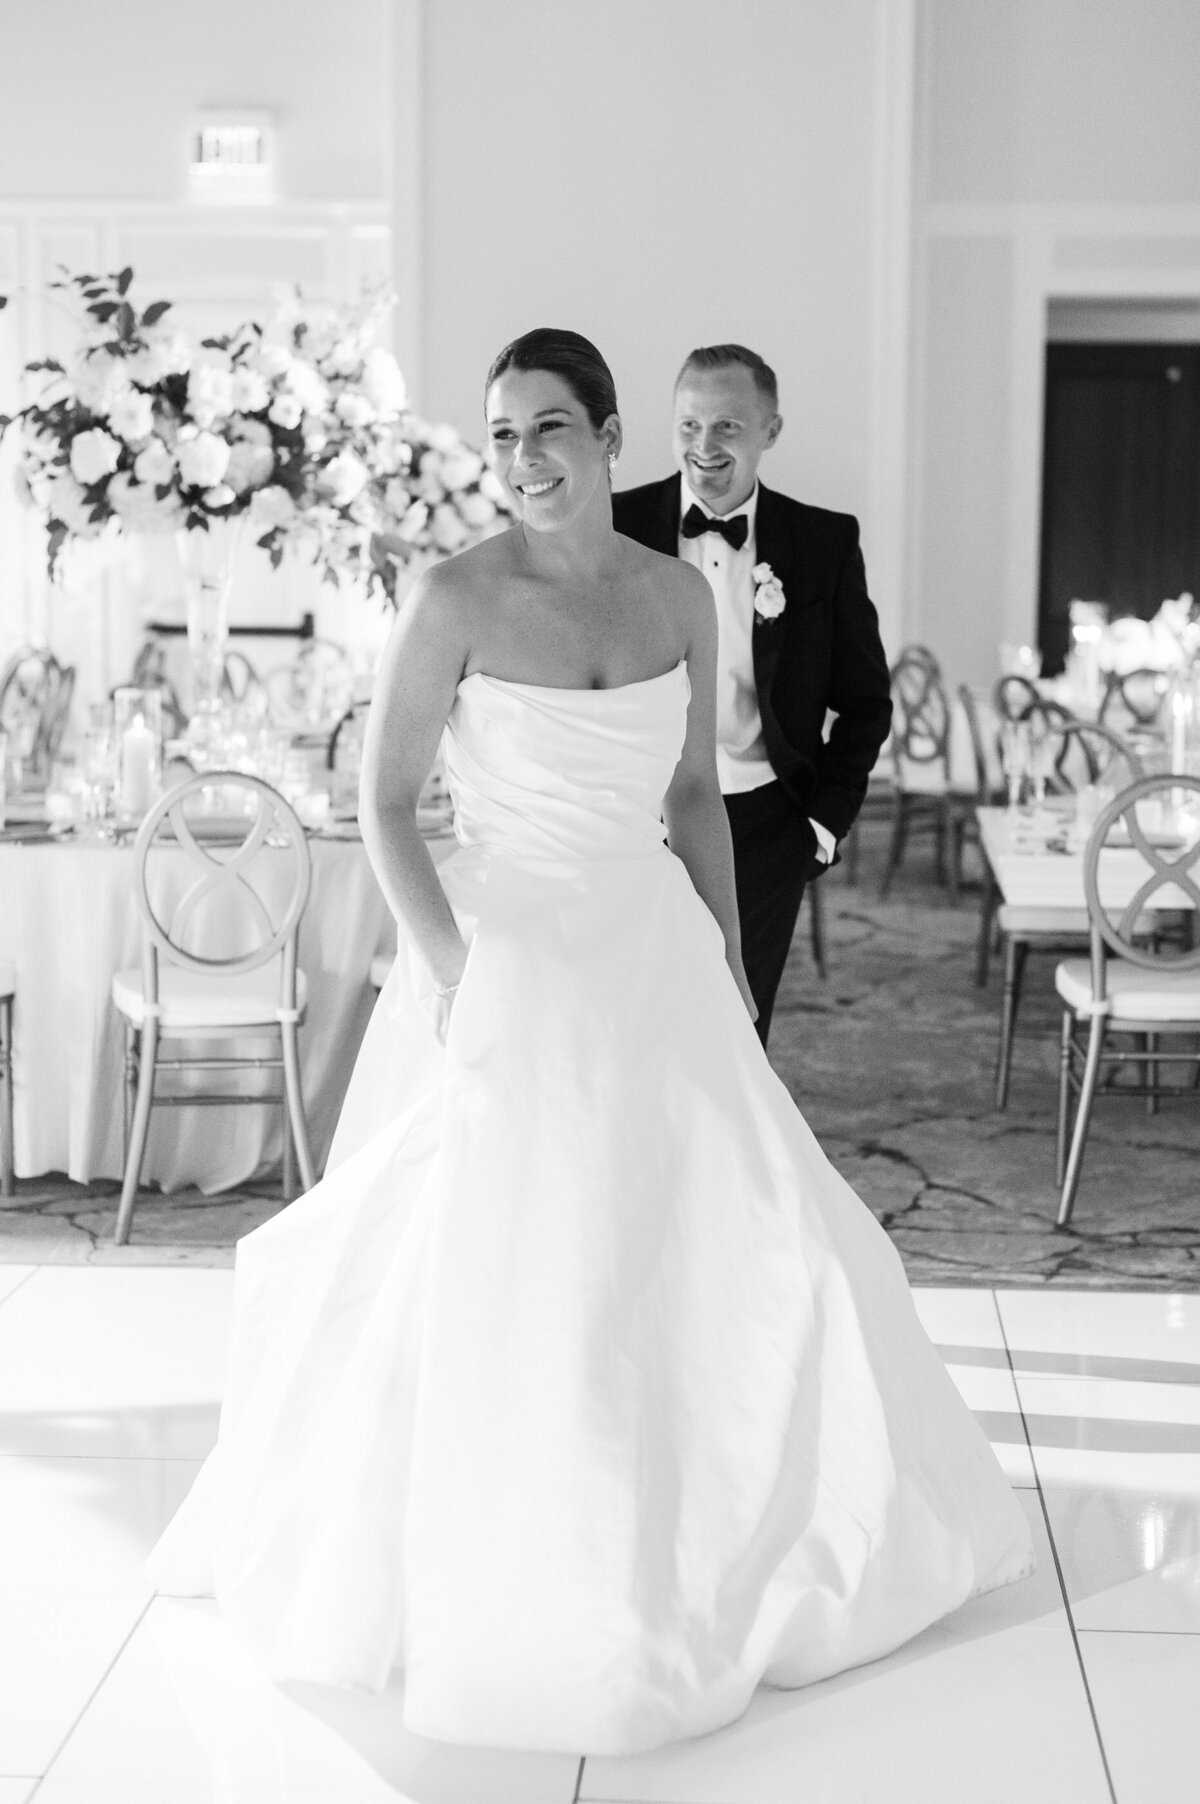 Kate-Murtaugh-Events-Boston-wedding-reception-bride-groom-room-reveal